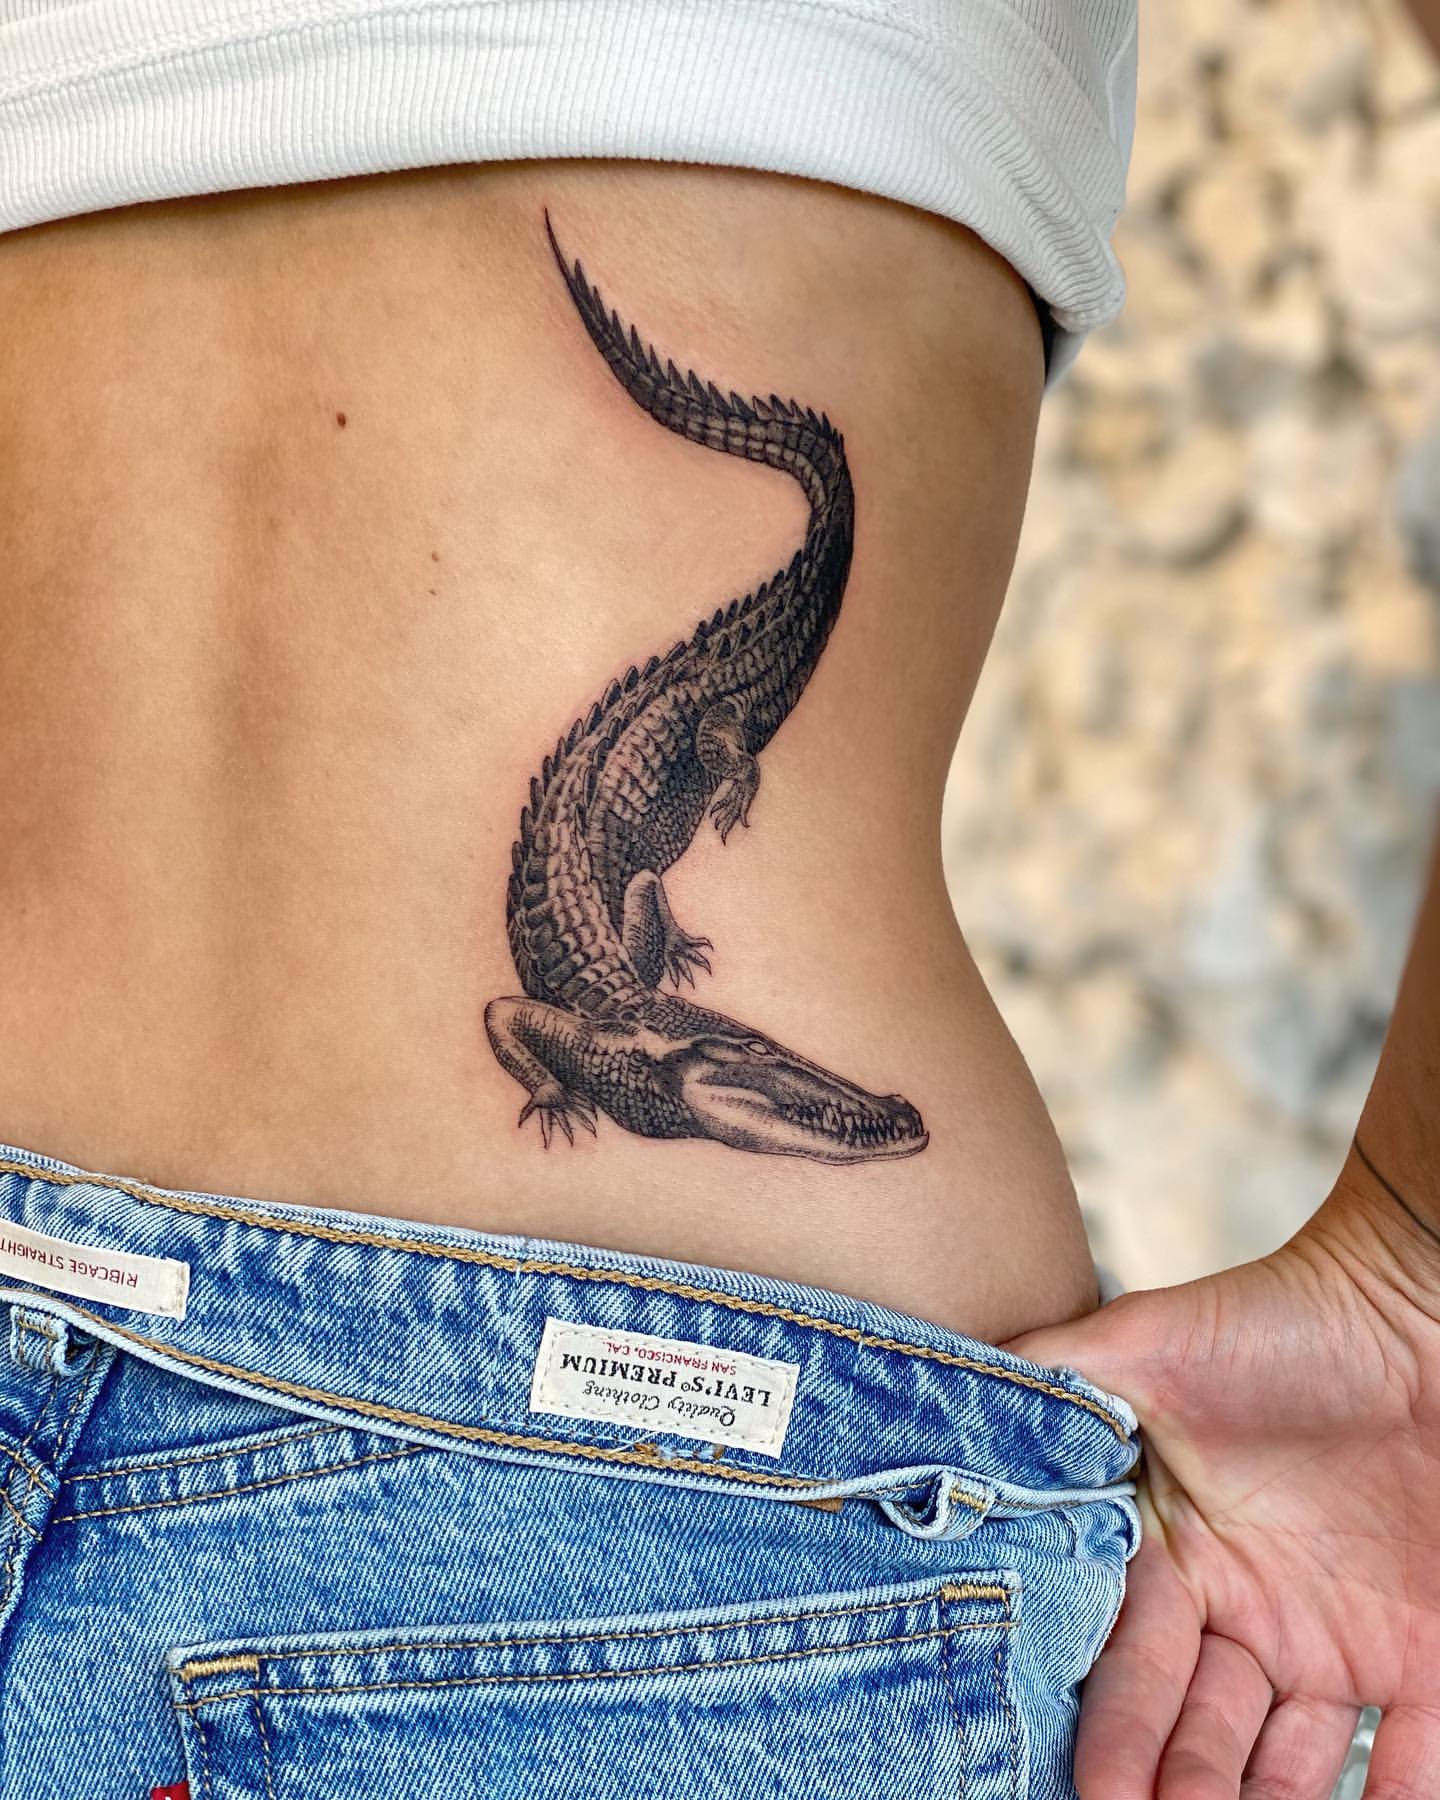 Spine Tattoos for Women 56